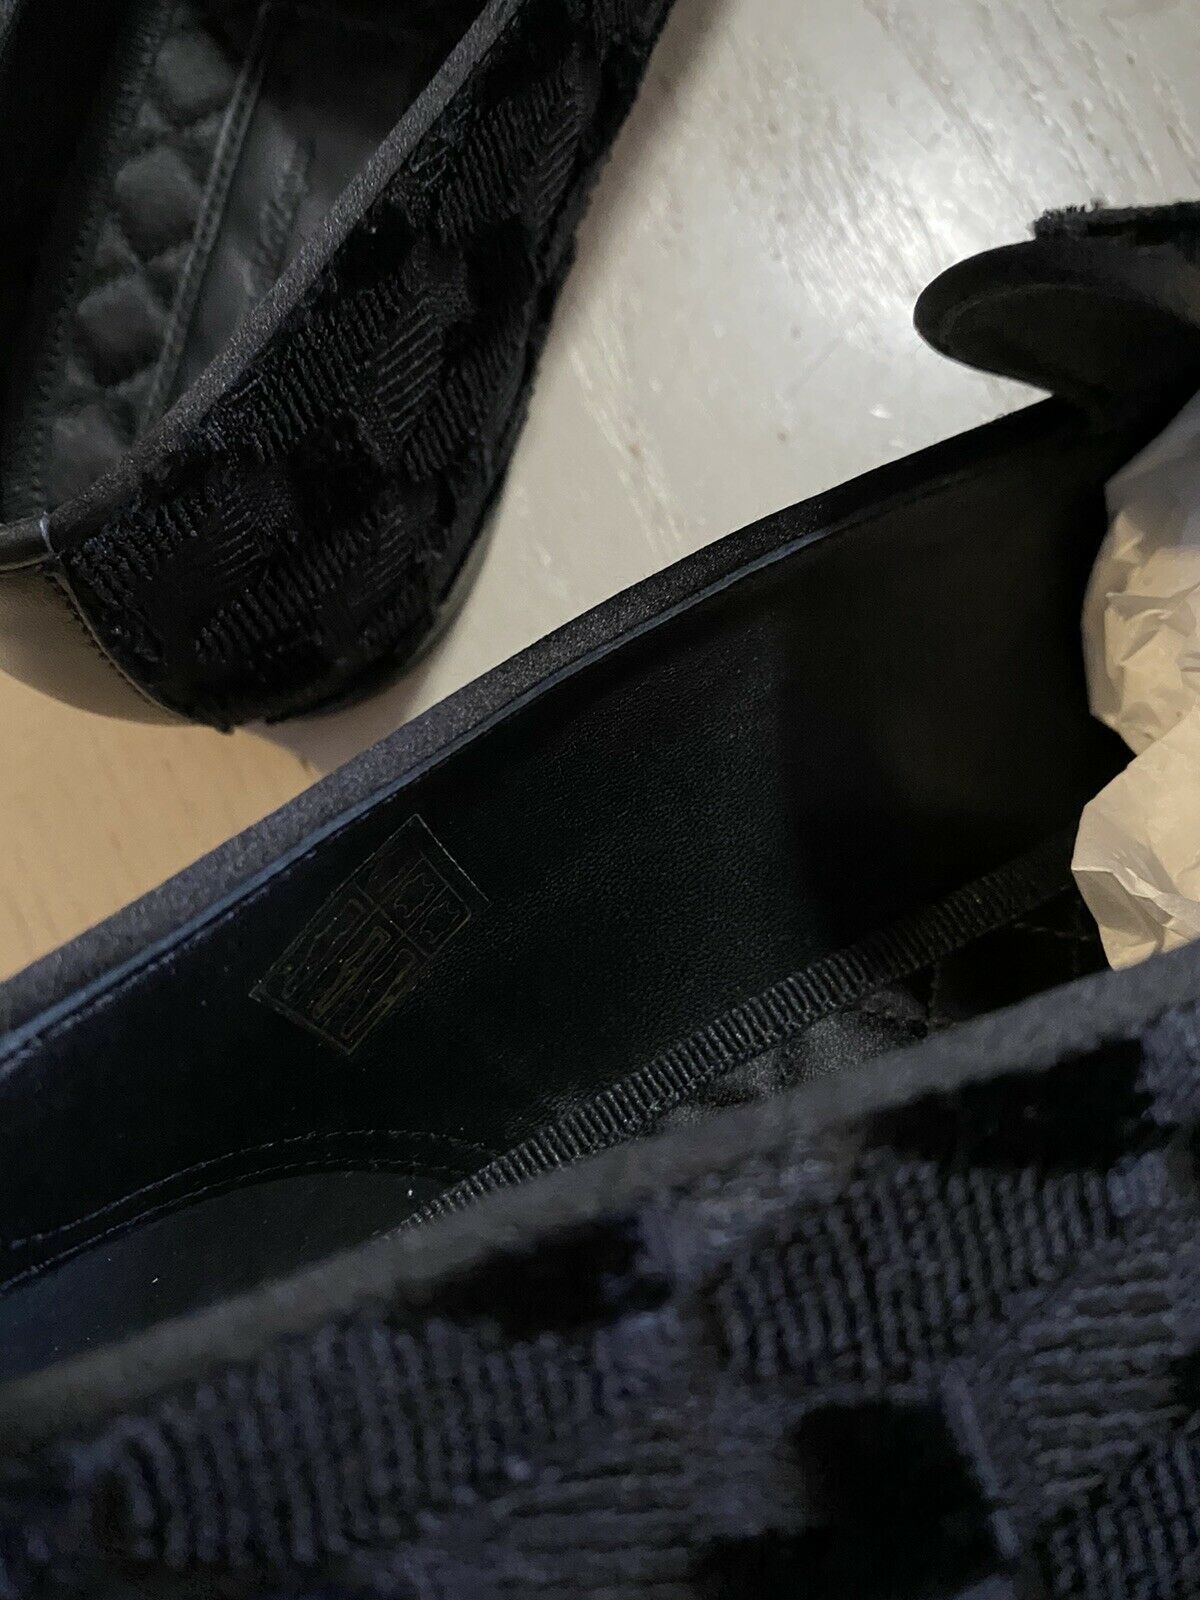 New $650 Ermenegildo Zegna Loafers Shoes Black 9.5 US Italy